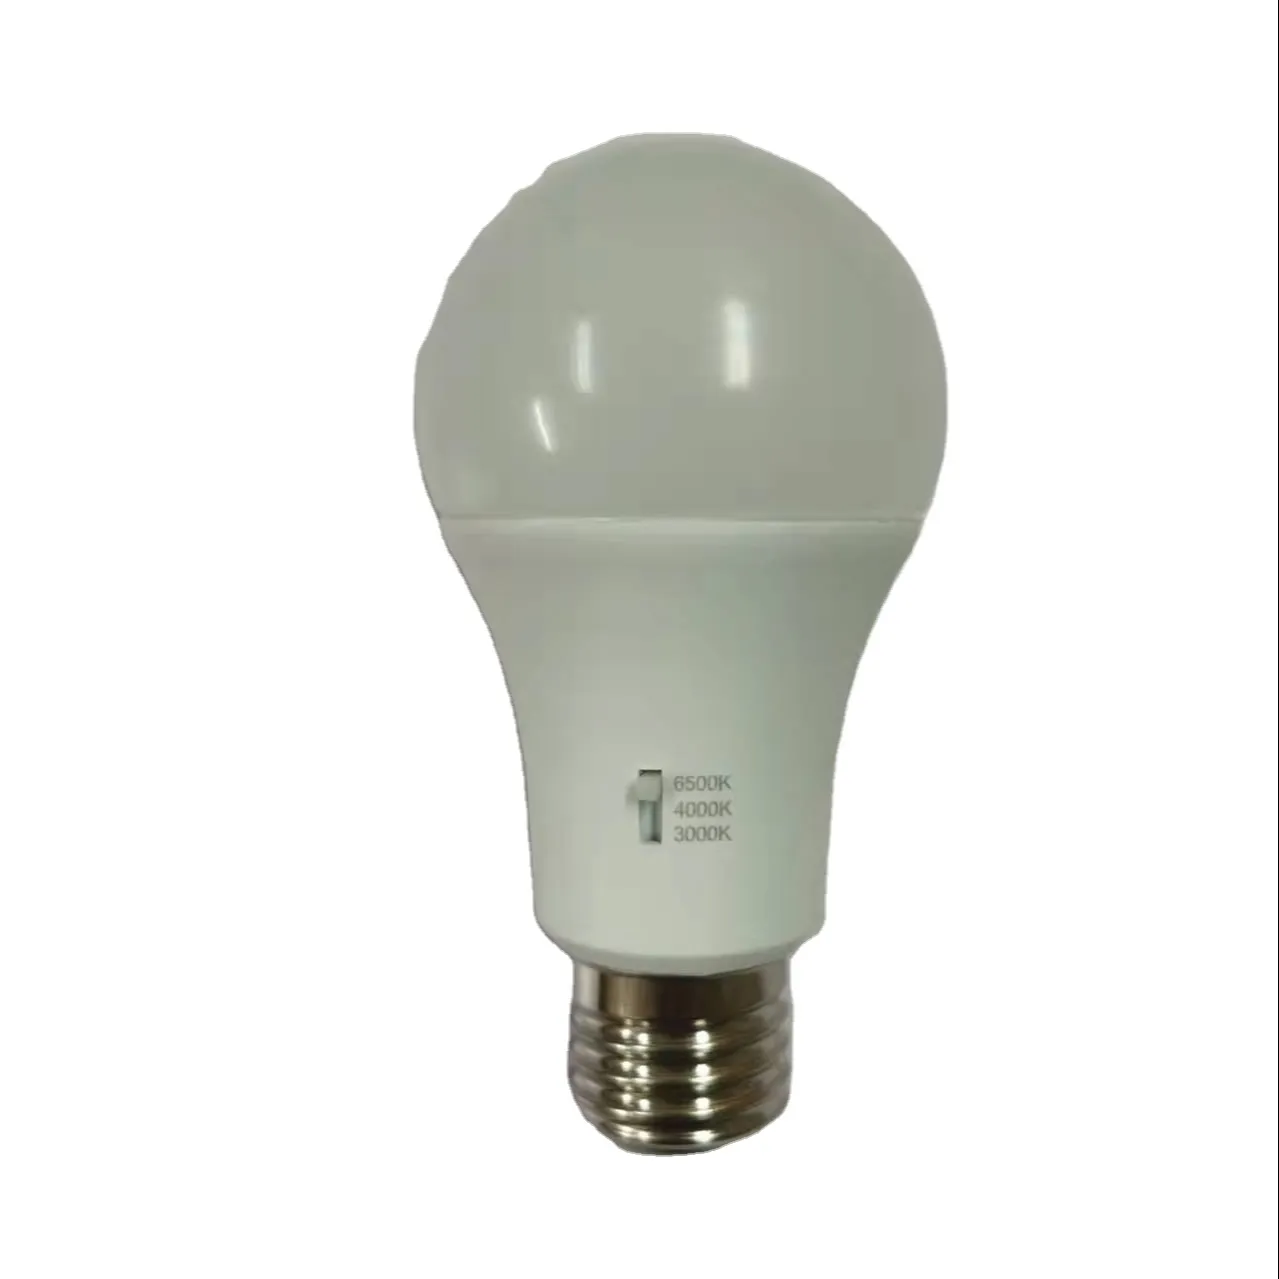 Boyid工場提供屋内照明A電球E27ベース5W7W 9W 12W 15W 3000k/4000k/6500k調整可能なLED電球